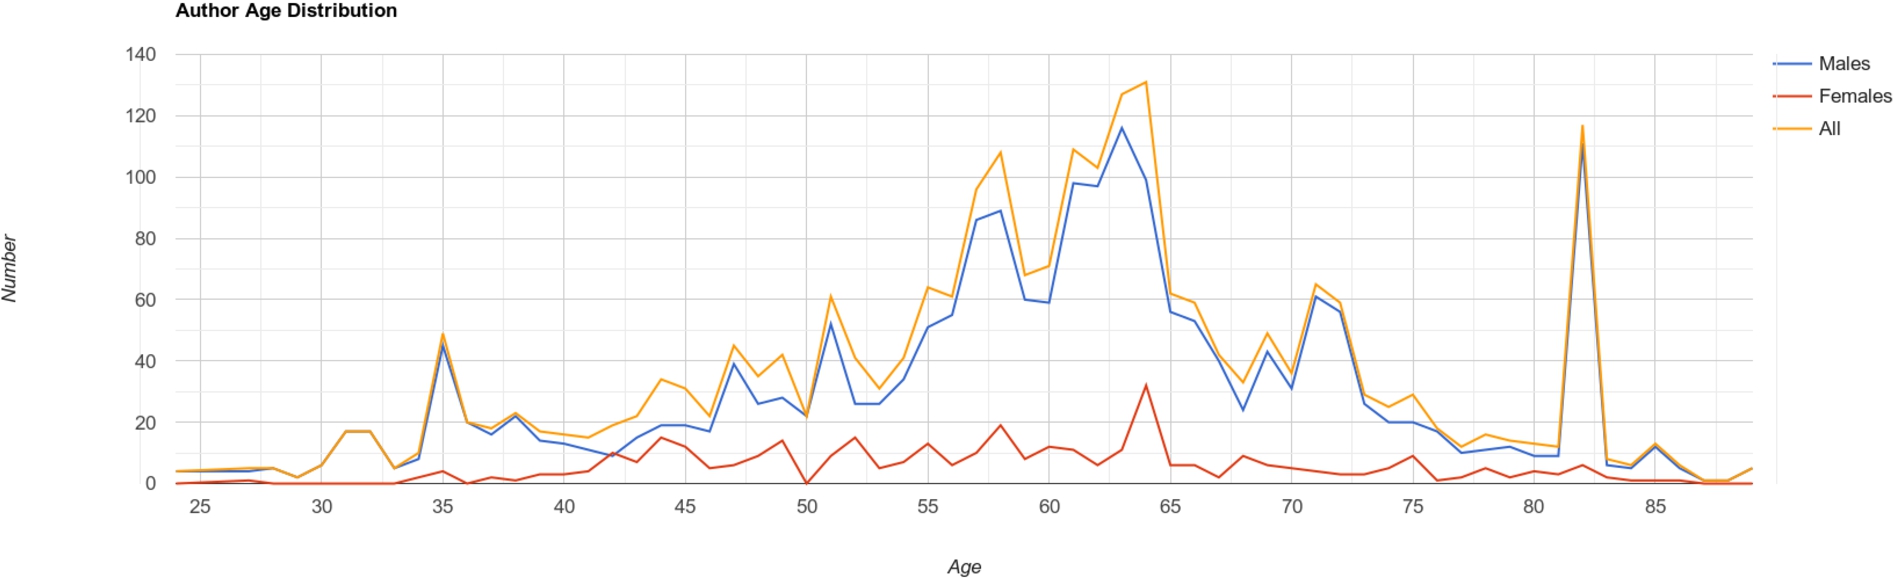 Author age distribution.